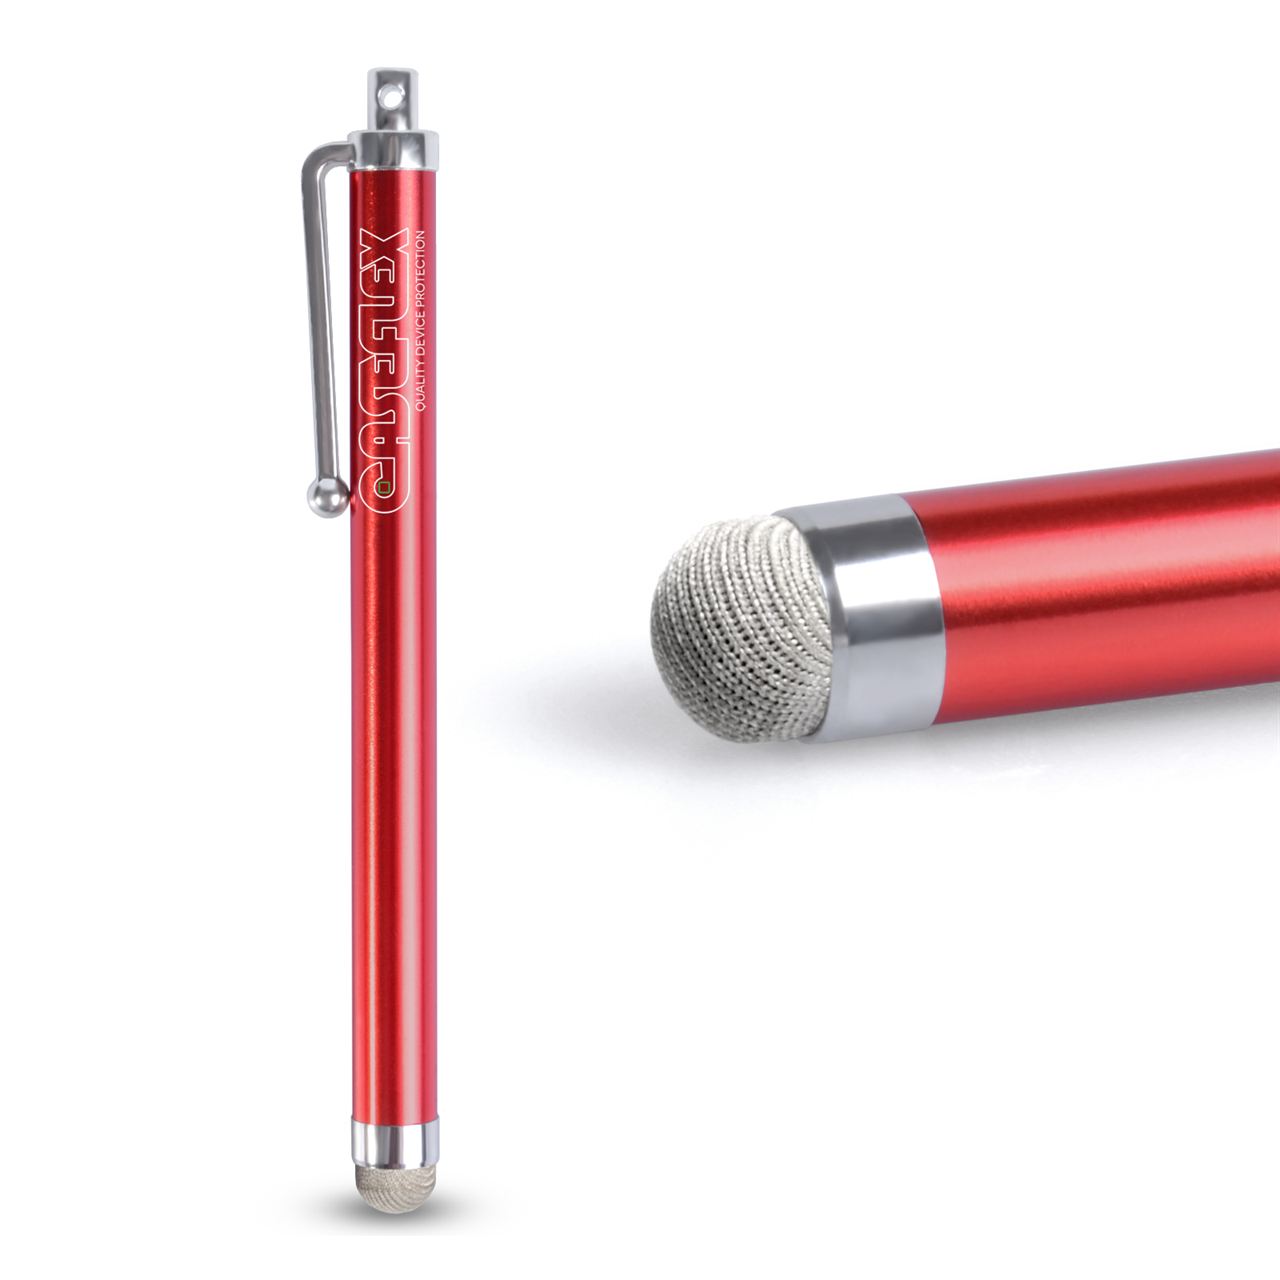 Caseflex Stylus Pen - Red